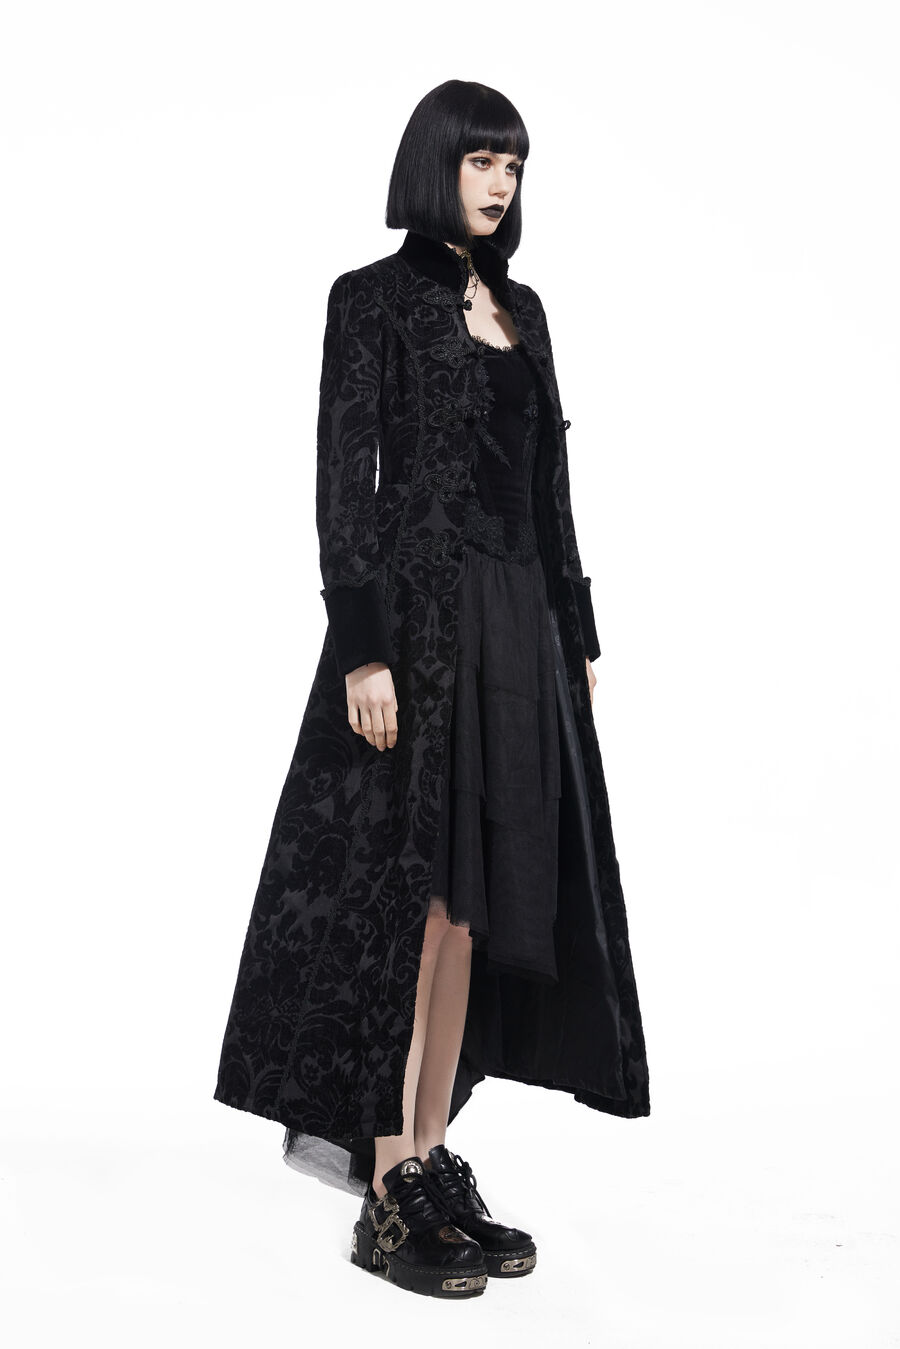 photo n°2 : Manteau long femme gothic brocard noir